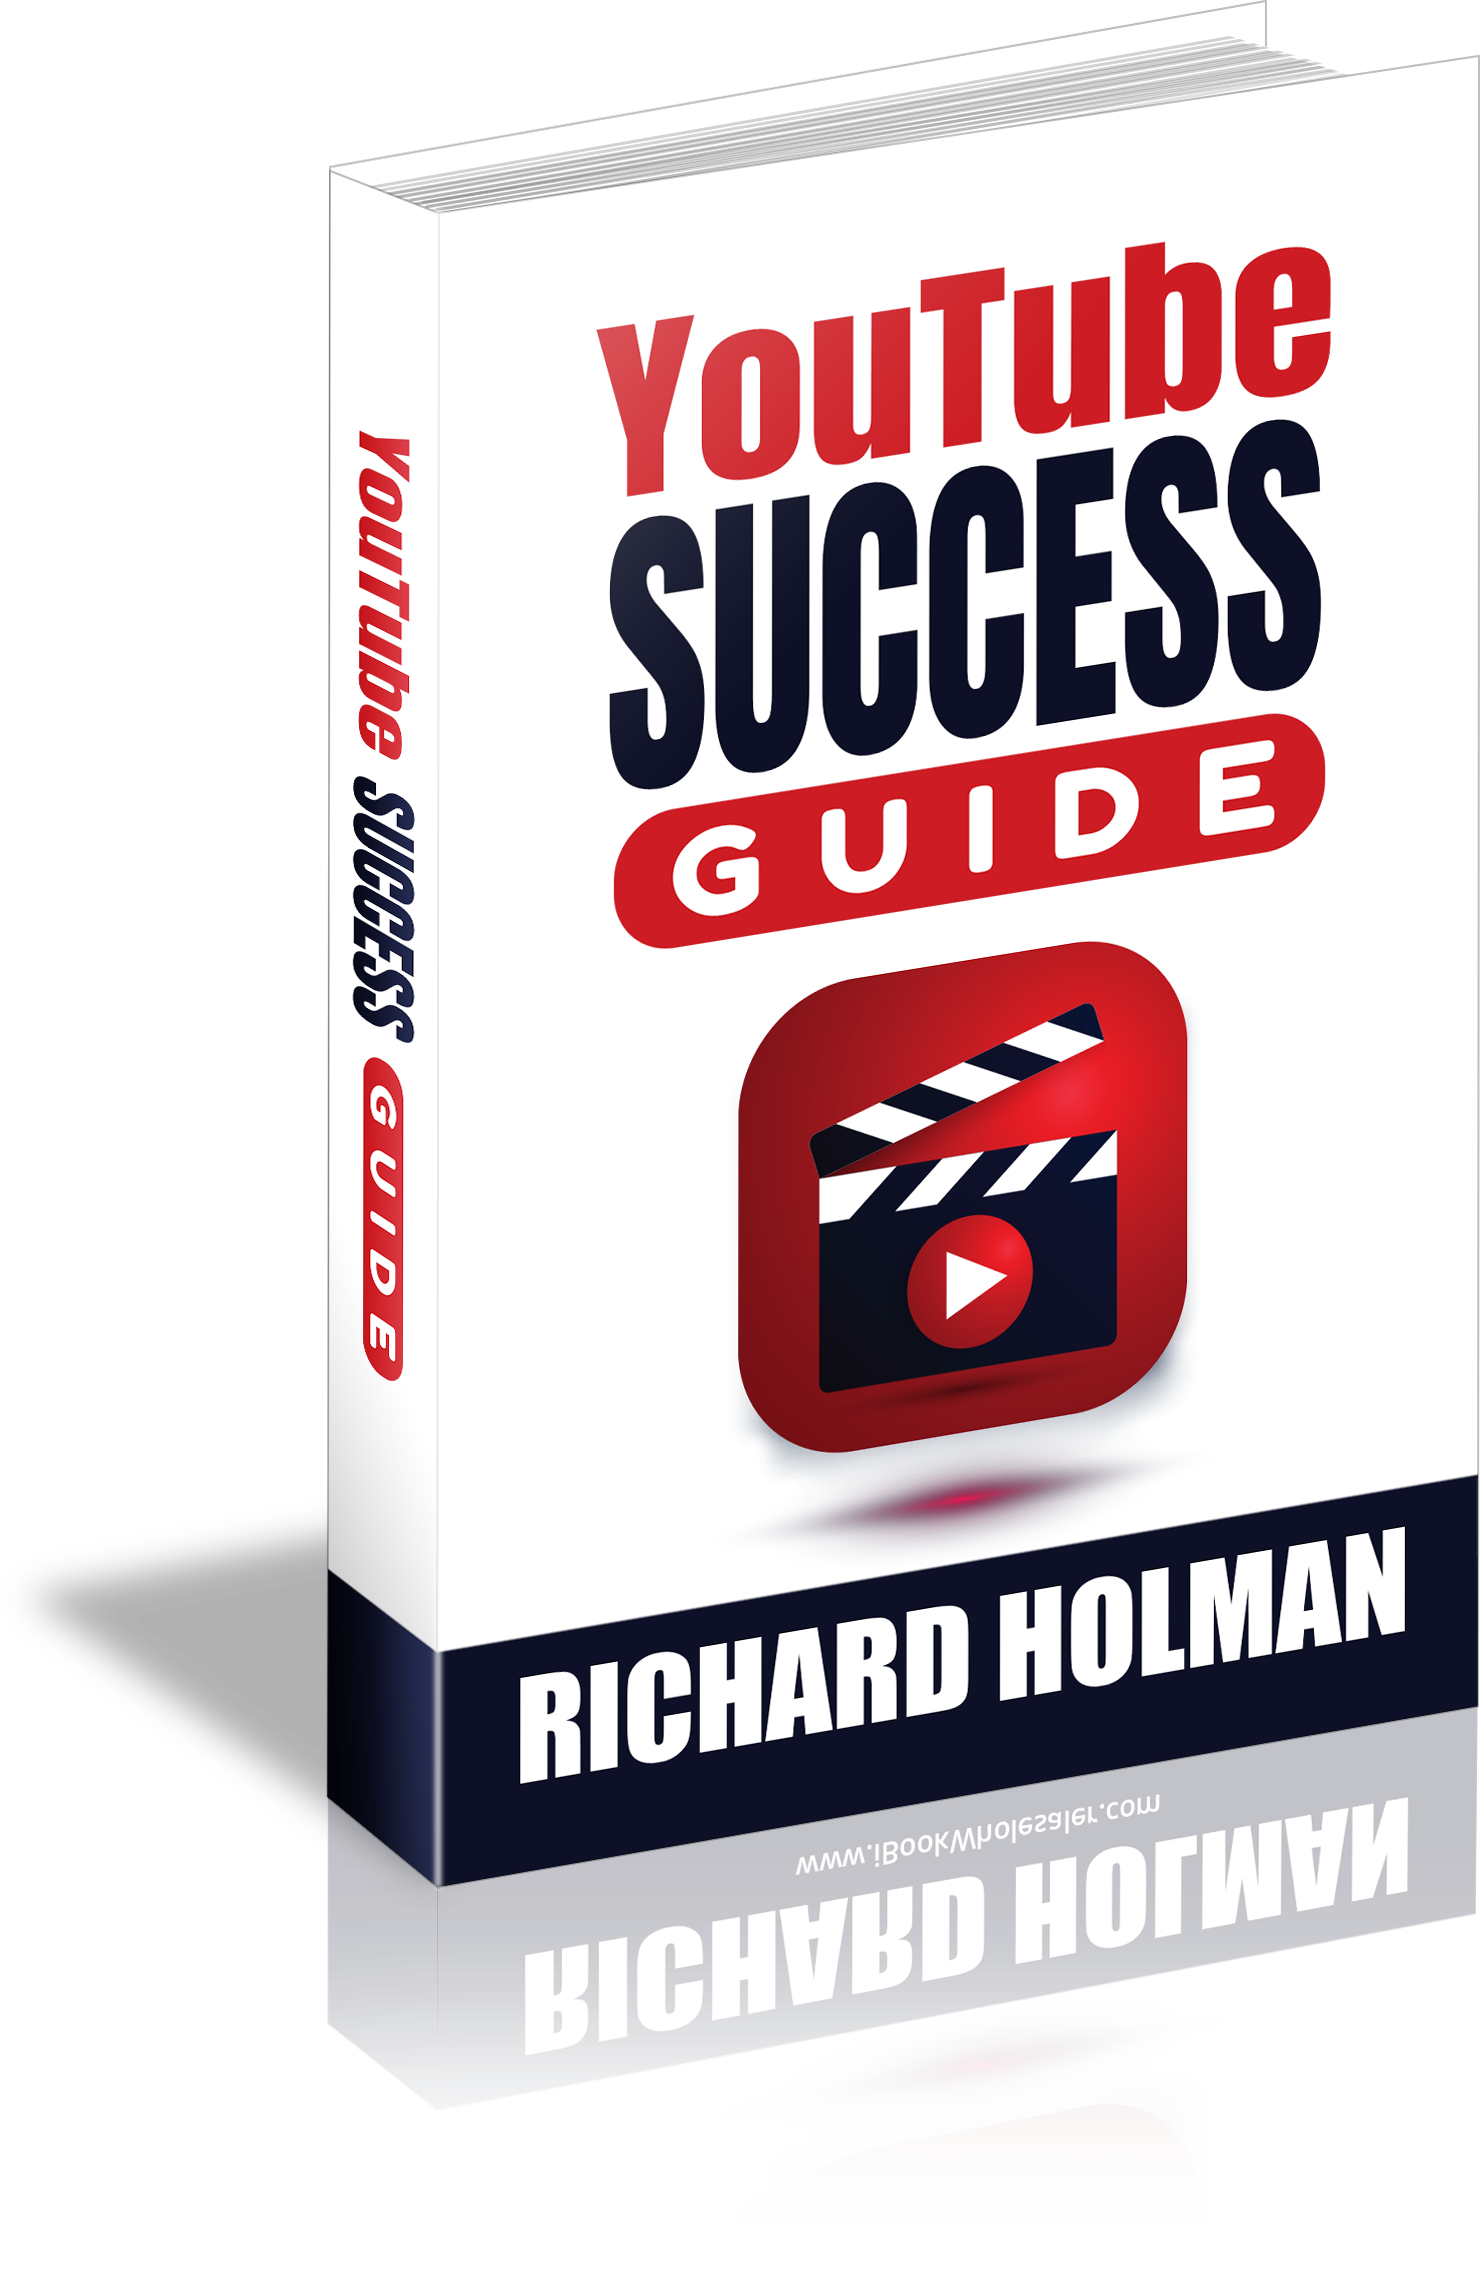 YouTube Success Guide (book)